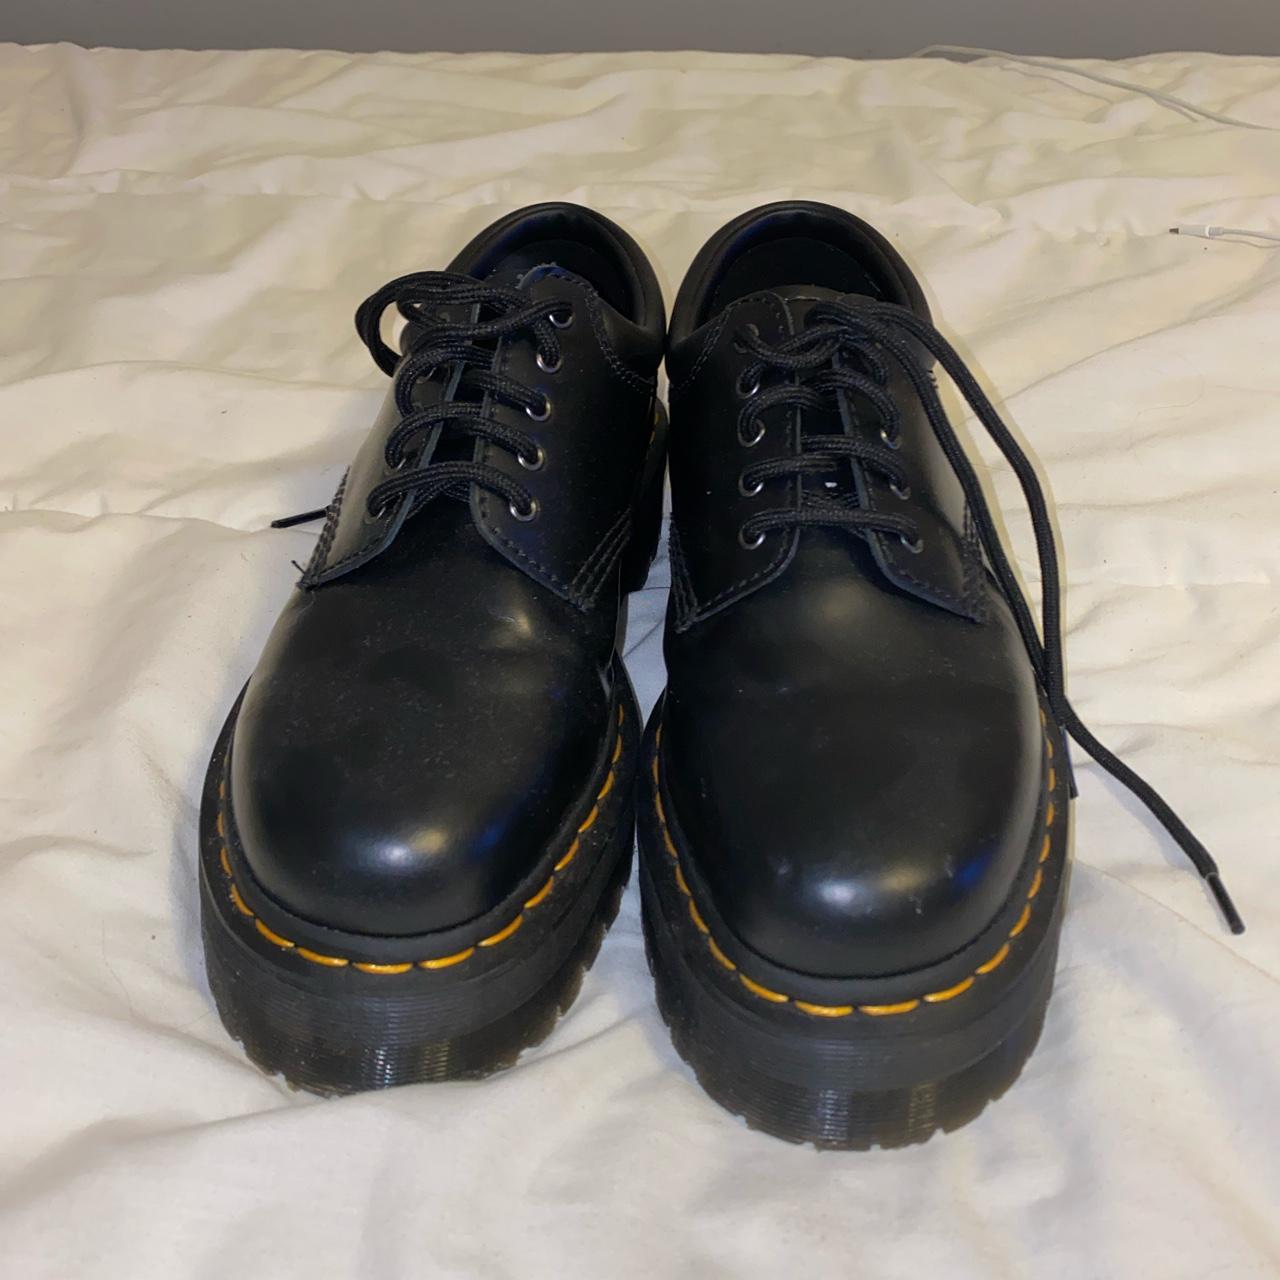 Doc Martens 8053 Leather Platform Casual Shoes Size... - Depop